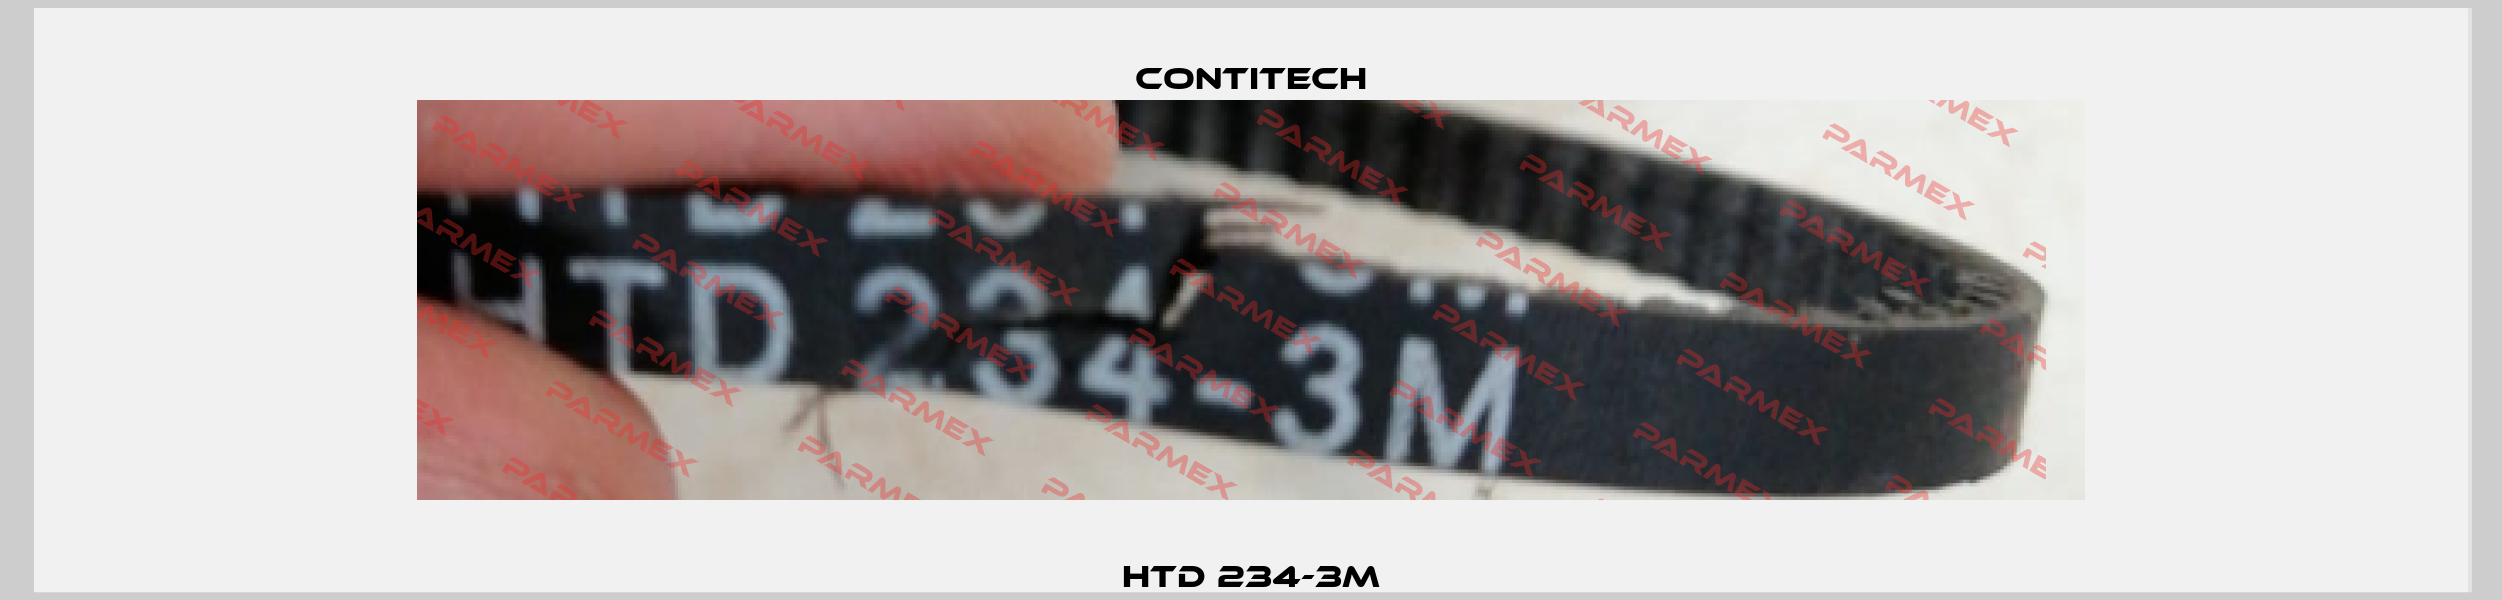 HTD 234-3M Contitech